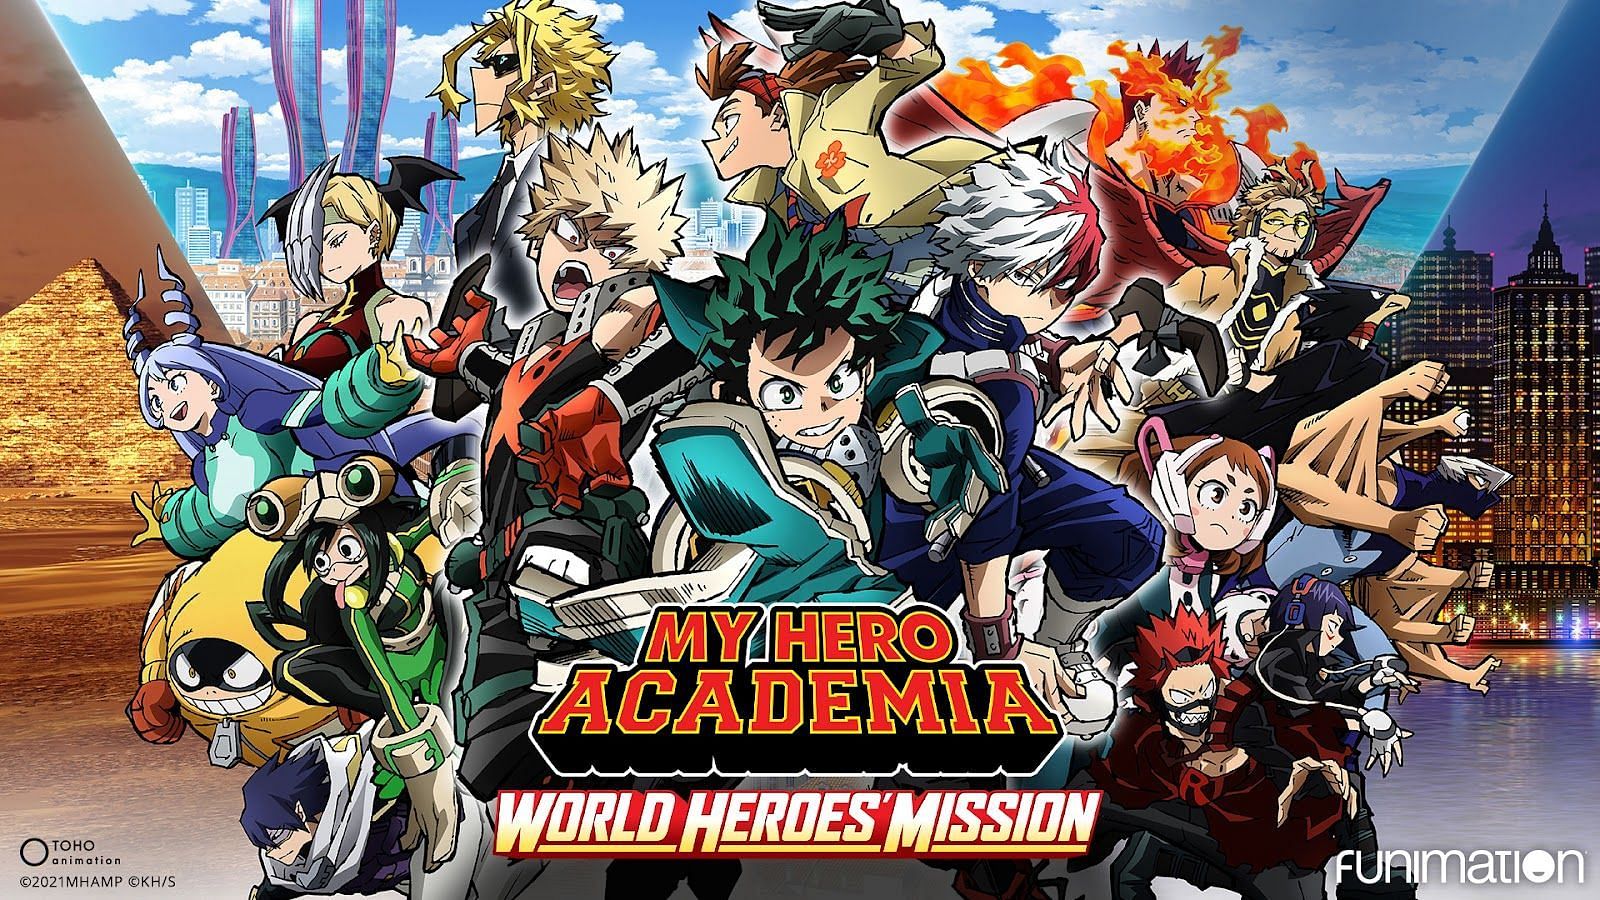 Yuki Hayashi My Hero Academia: World Heroes' Mission Original